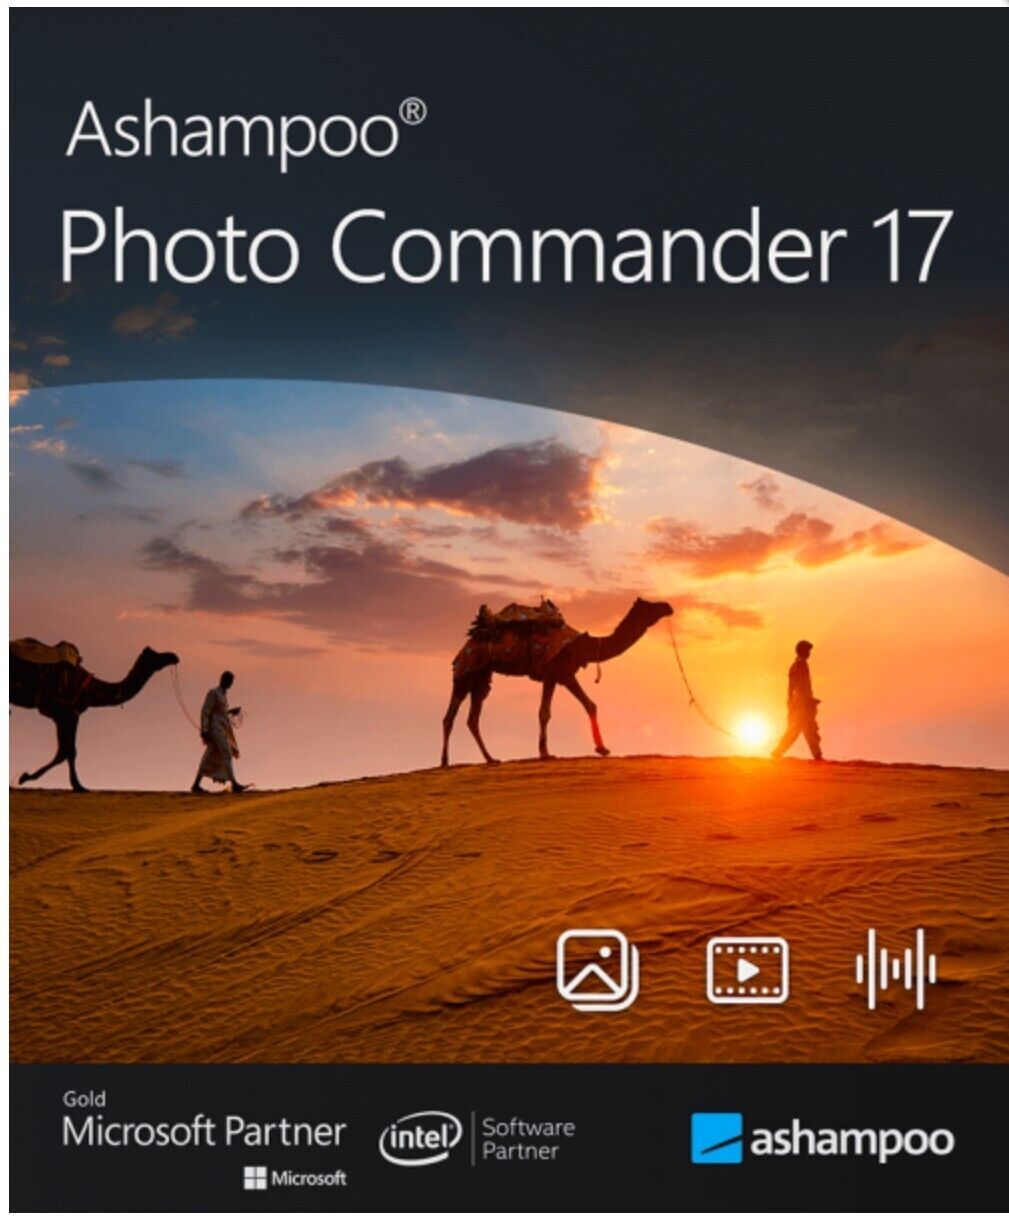 2x Ashampoo Photo Commander 17 - Lifetime for PC [Disc] or [4GB USB].